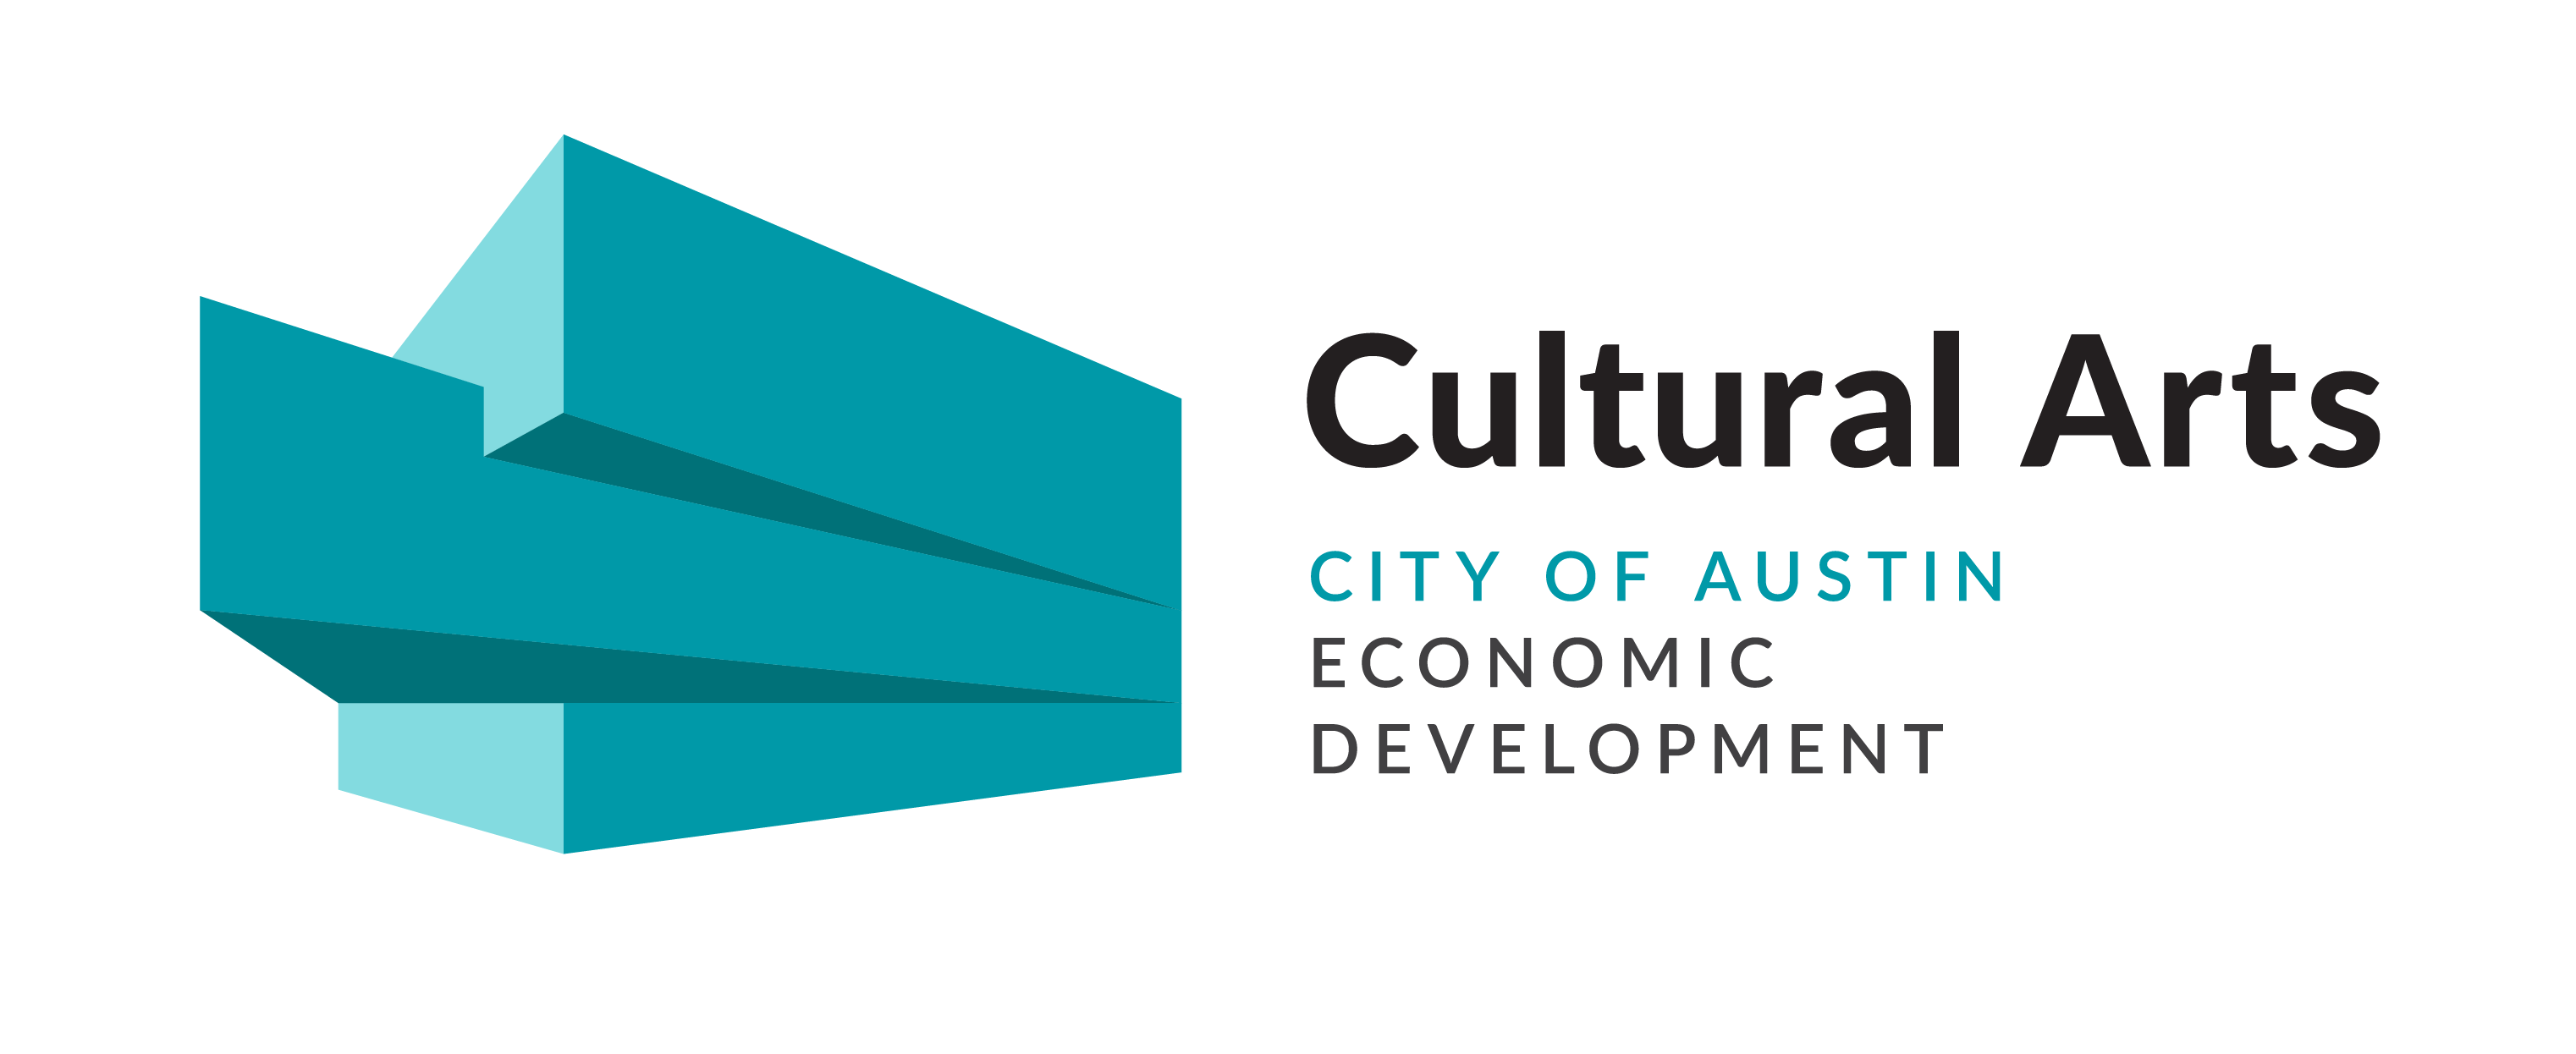 Cultural Arts City of Austin Economic Development Department